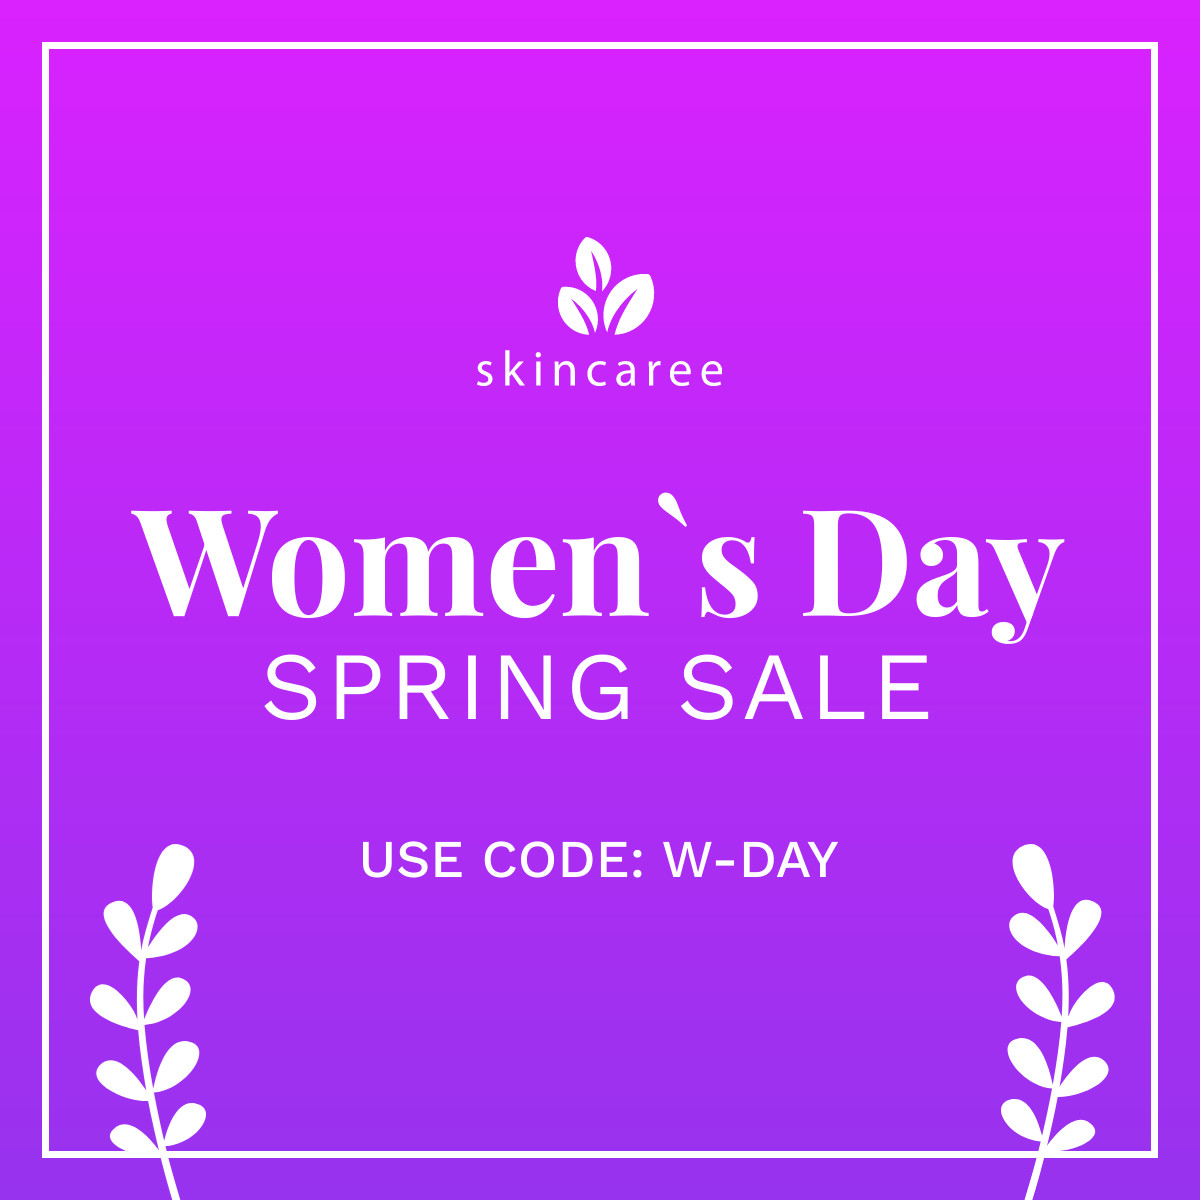 Women's Day Spring Sale Skincaree